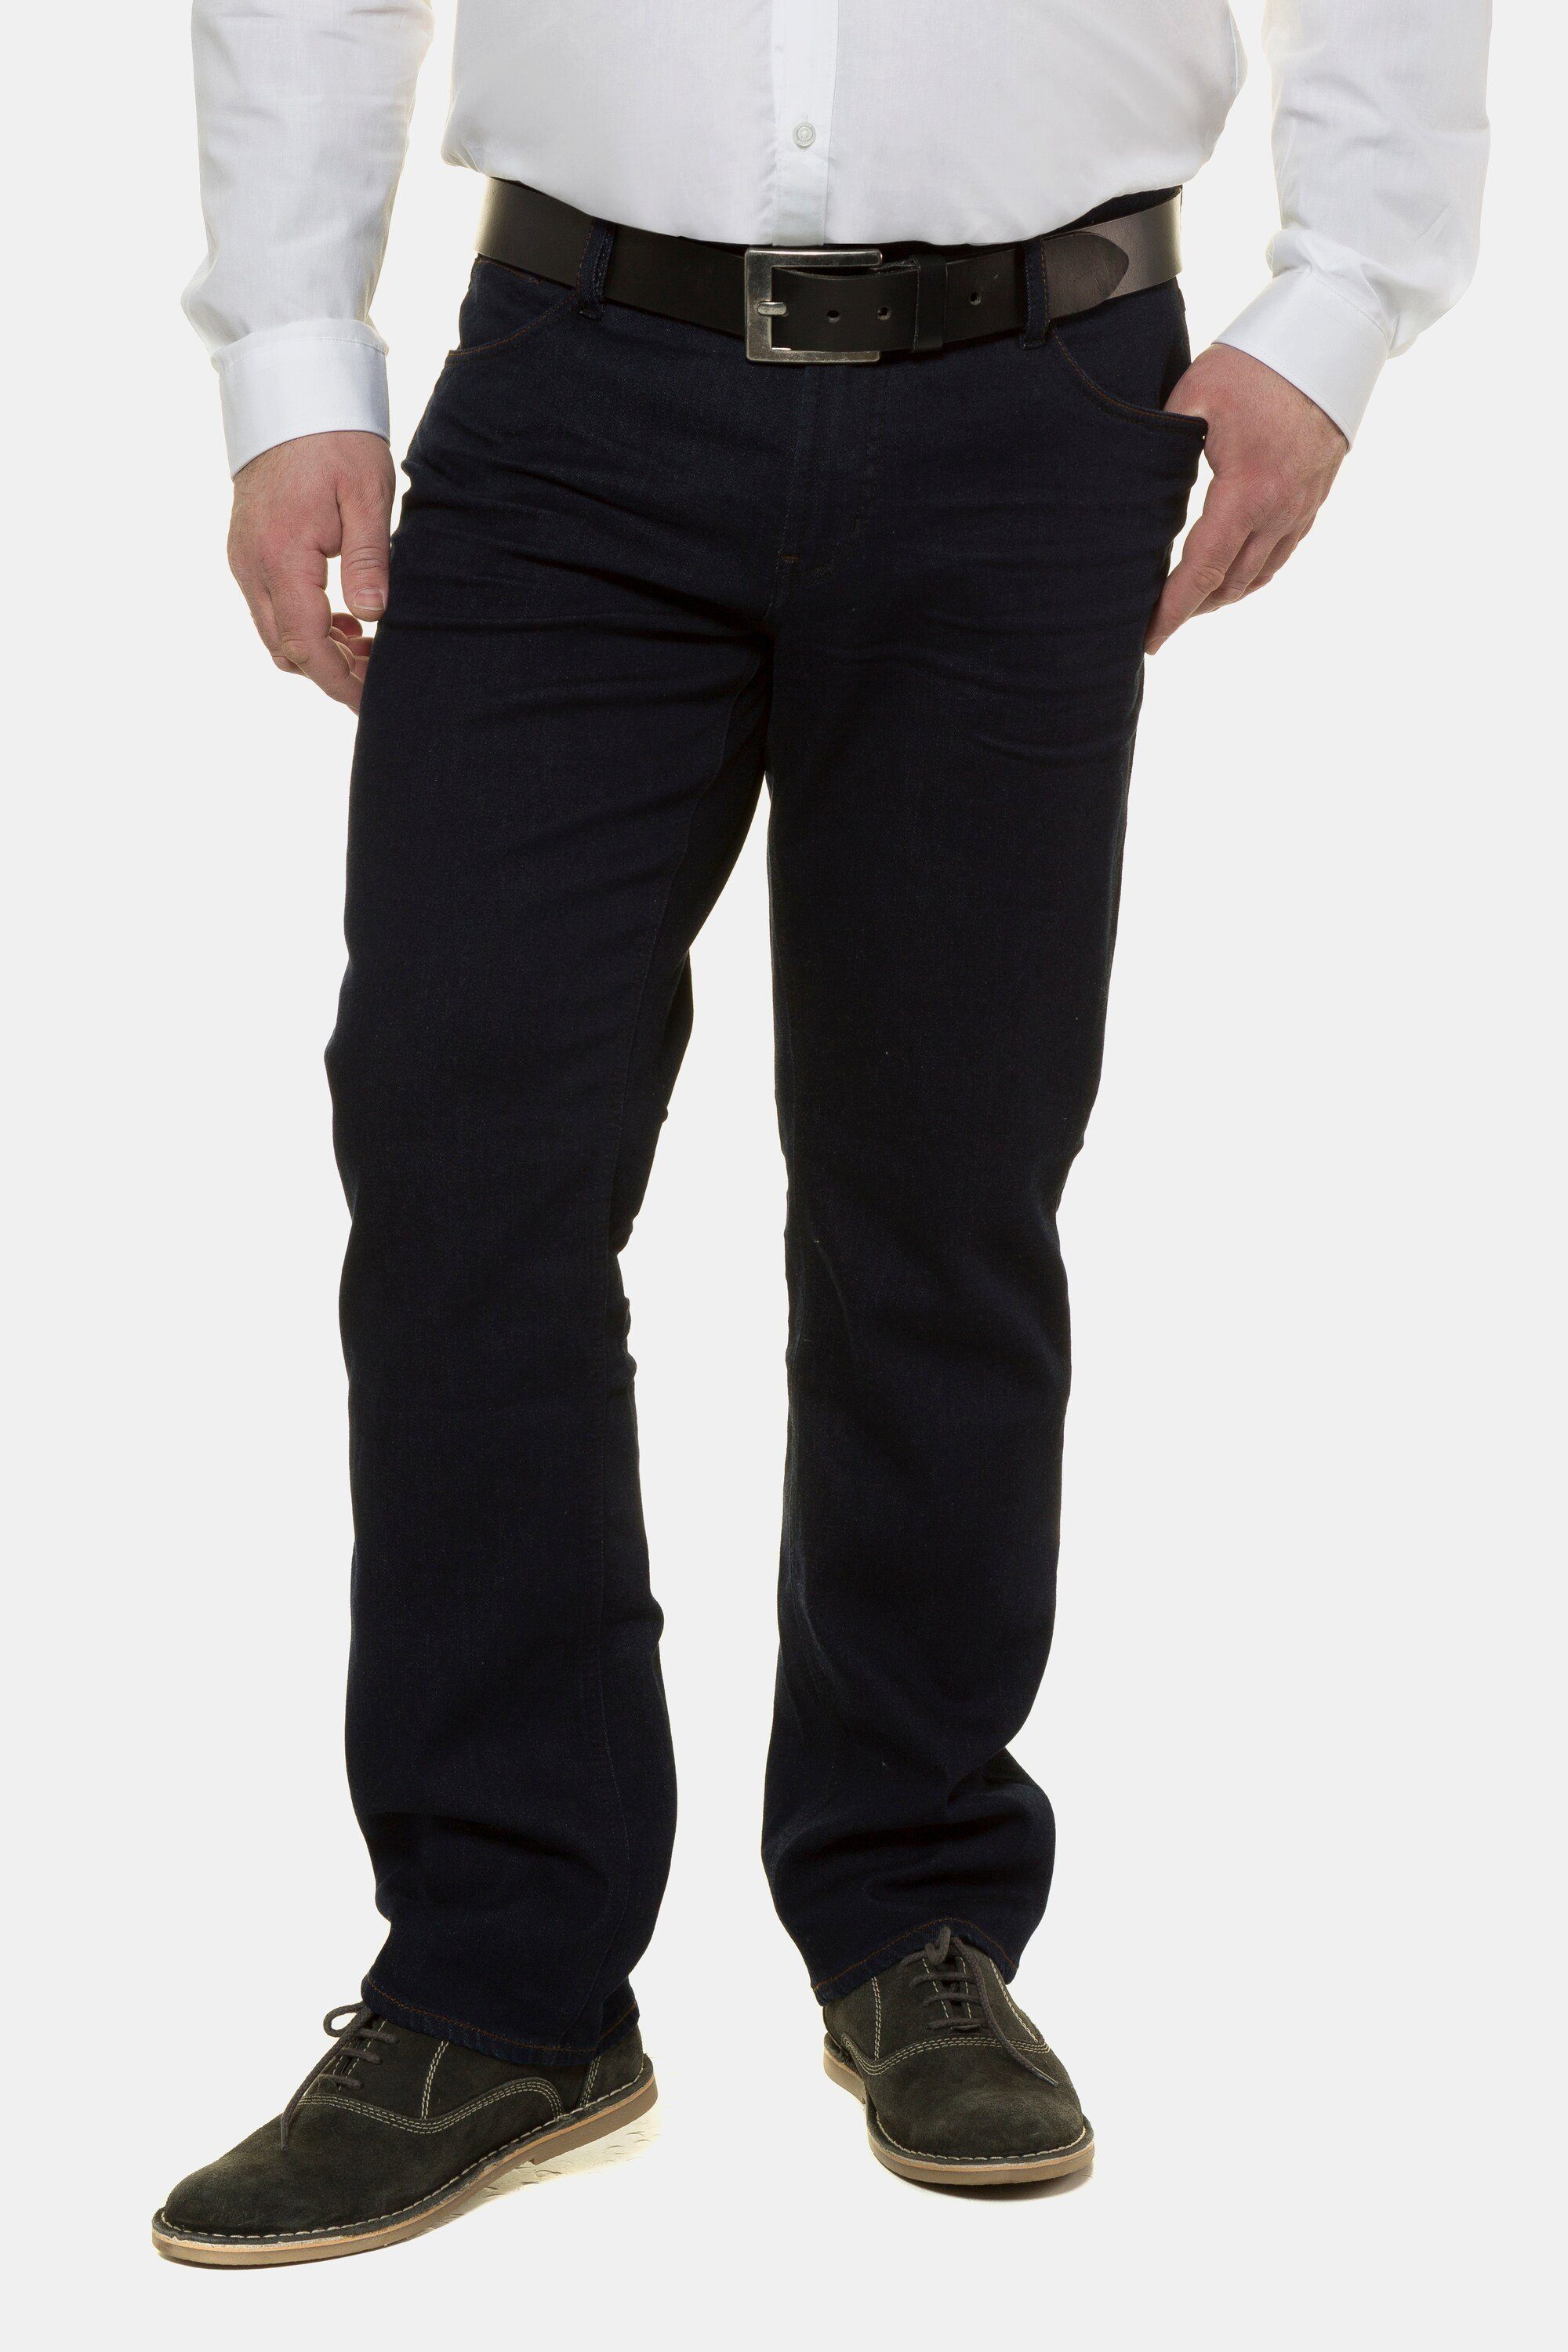 Top-Verkaufskonzept JP1880 Cargohose Jeans Bauchfit Denim 70/35 Gr. denim dark blue bis